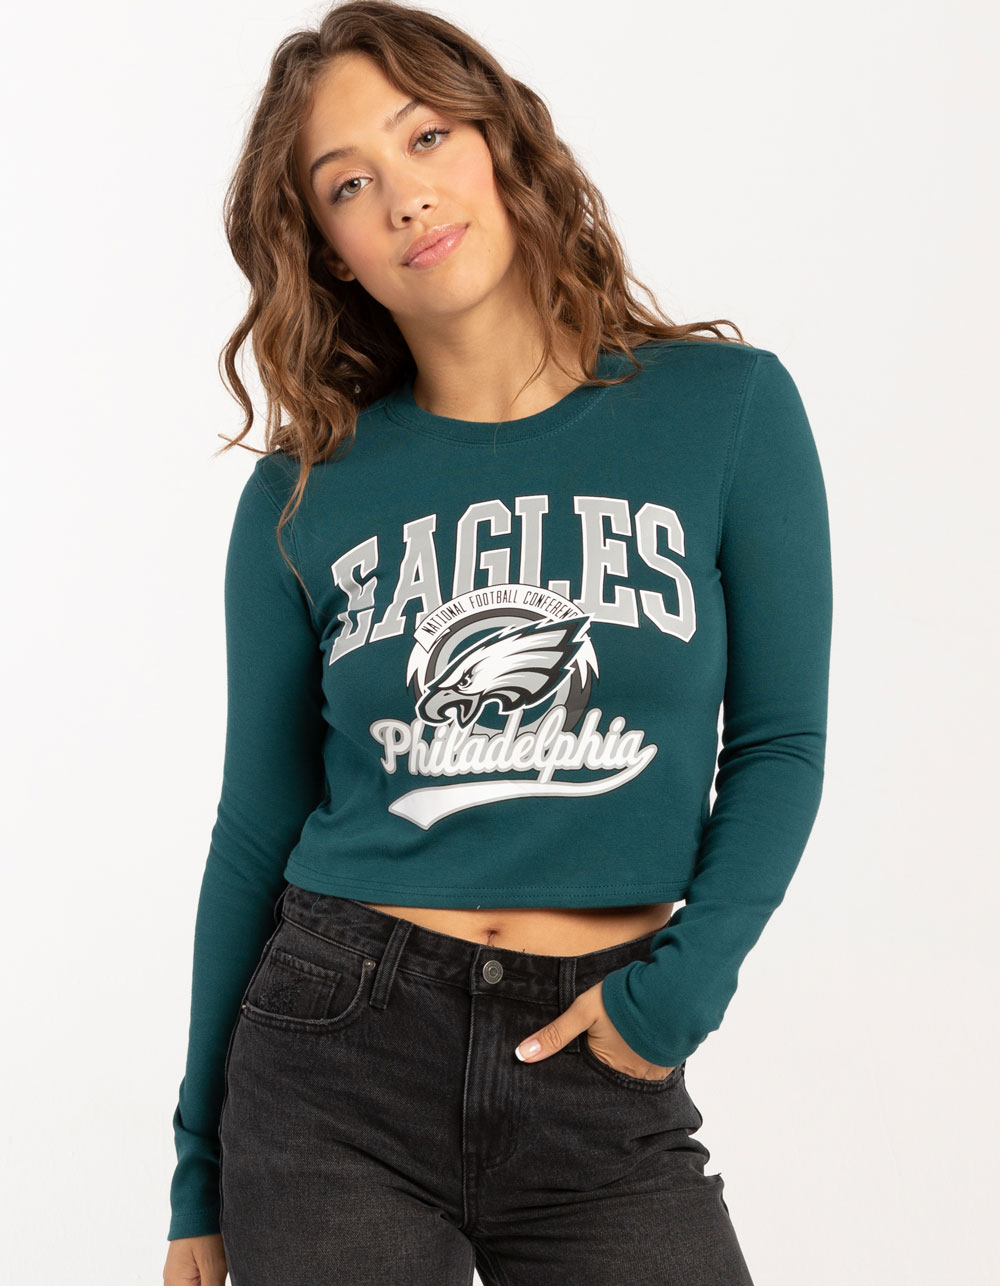 Nike Logo Essential (NFL Philadelphia Eagles) Women's T-Shirt.